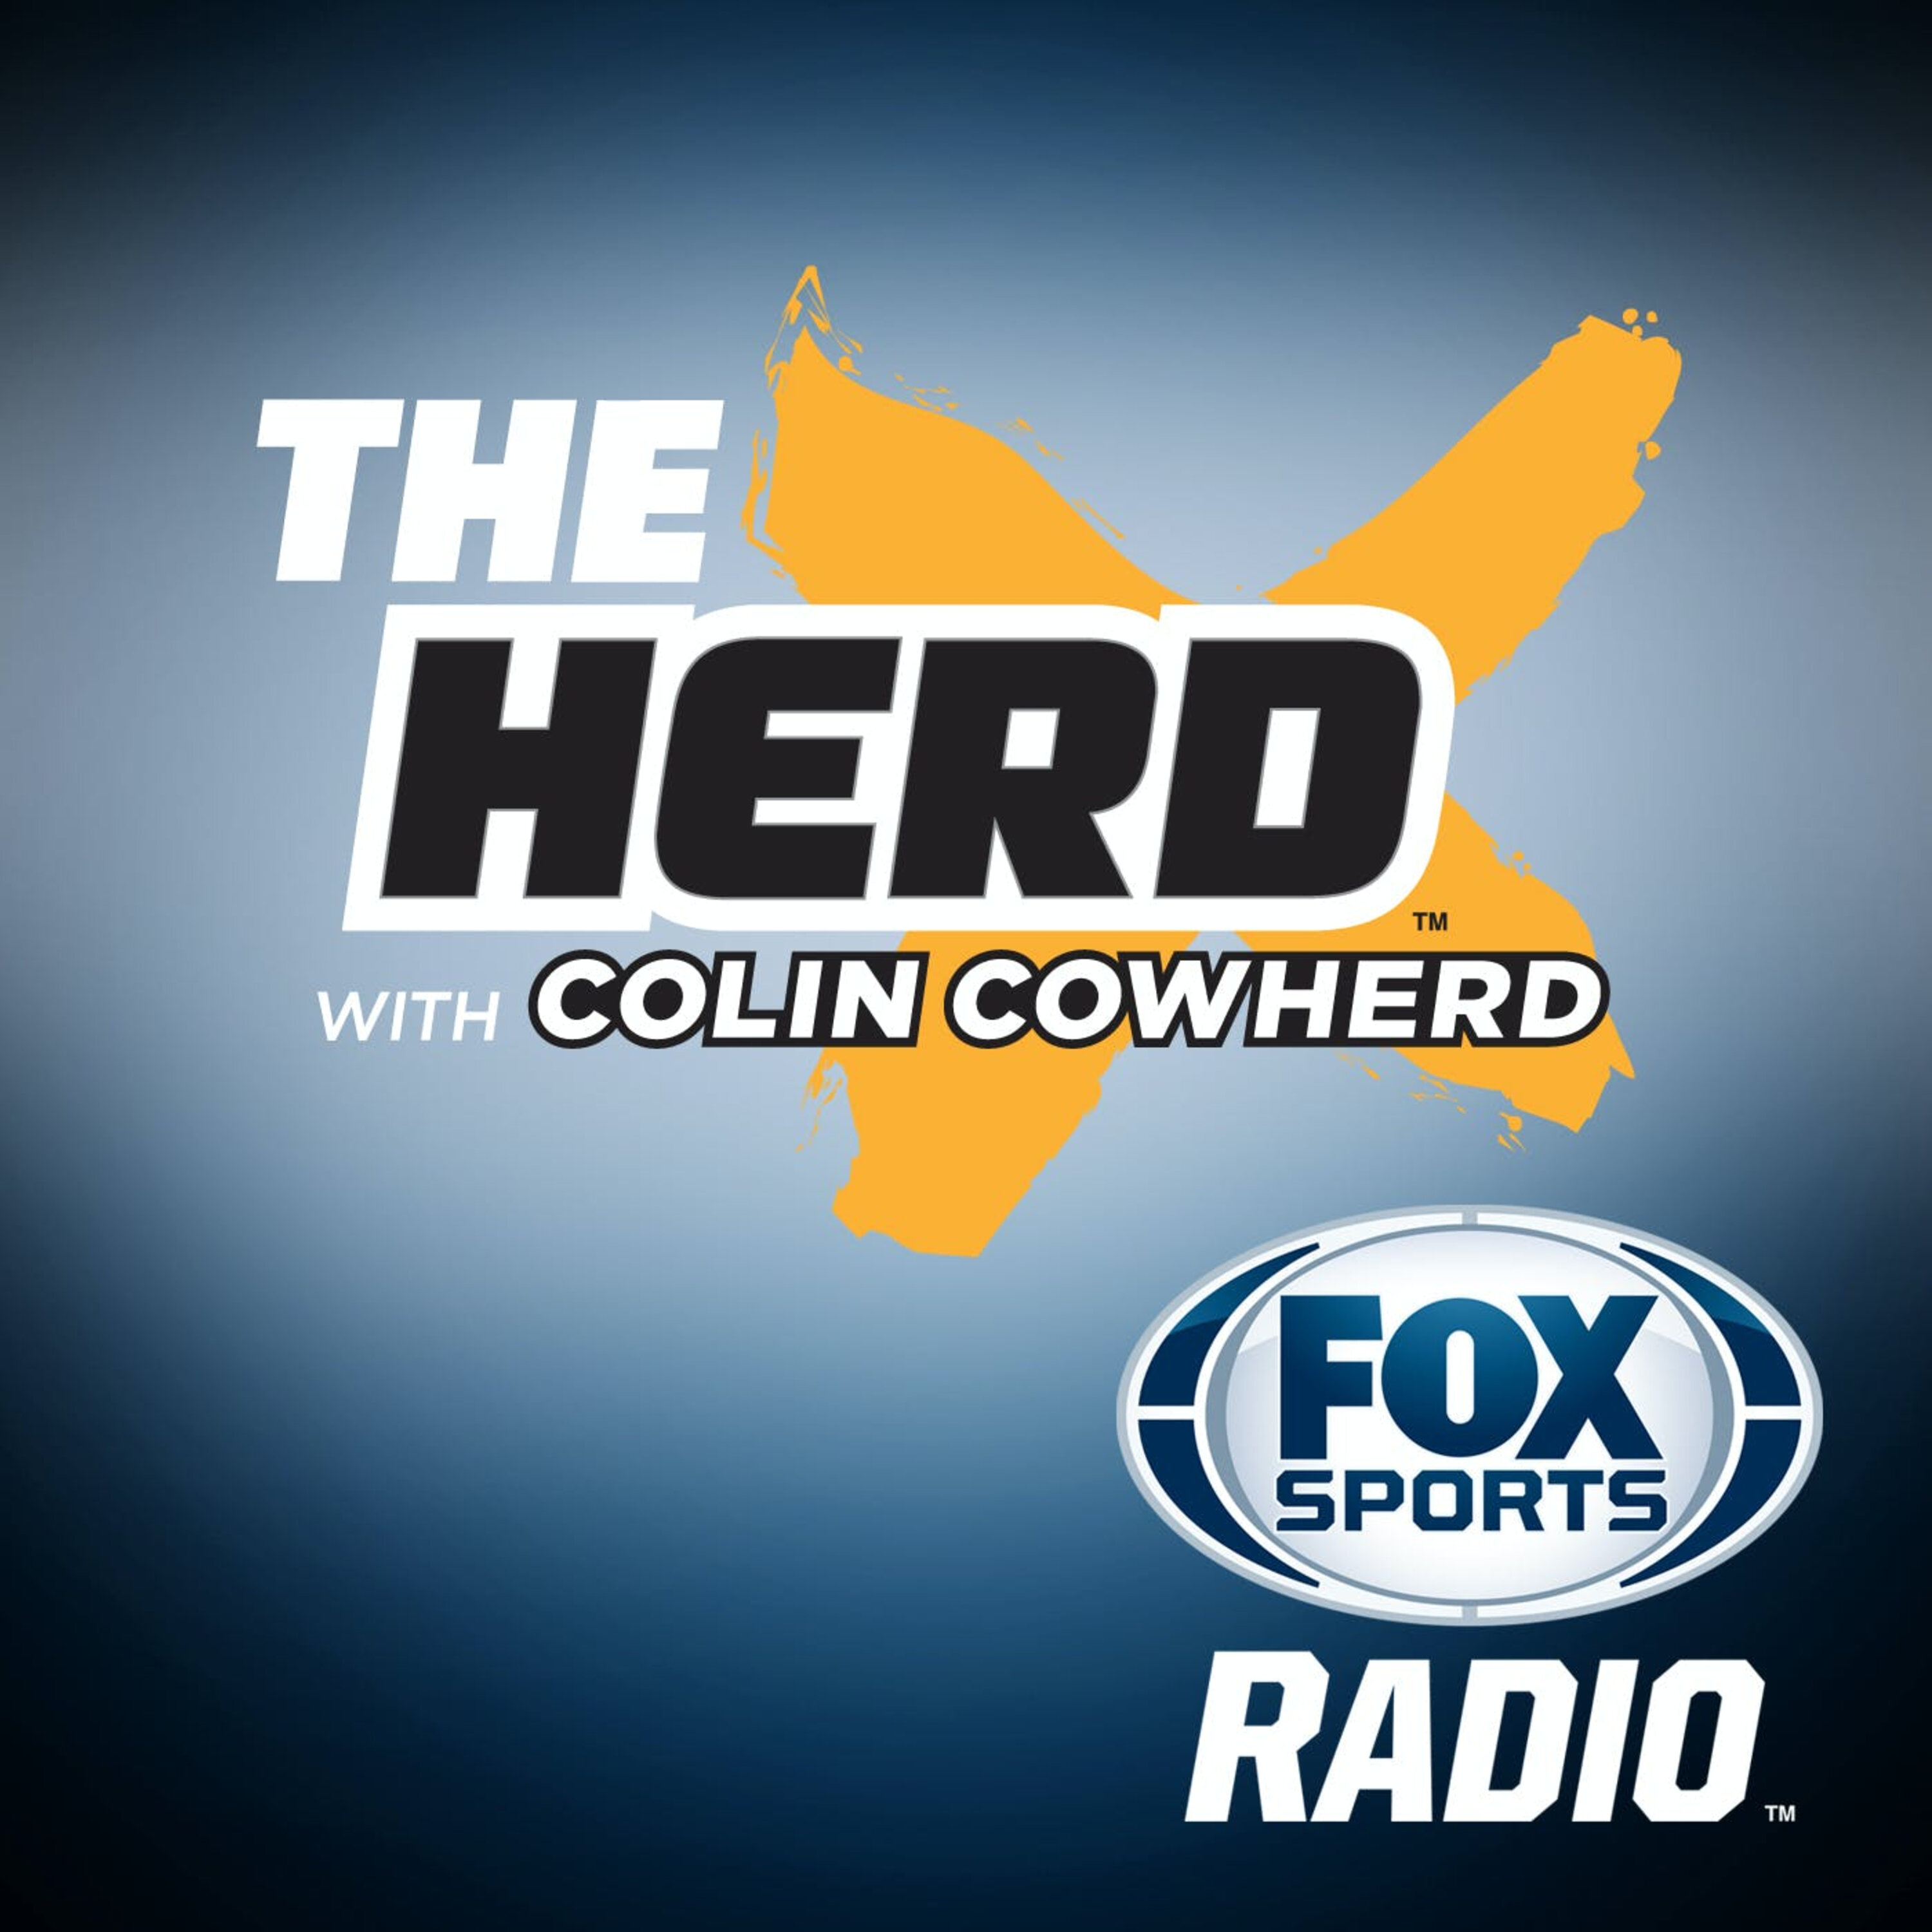 Bears-Seahawks, Josh Gordon, Steelers, and the Herd Hierarchy